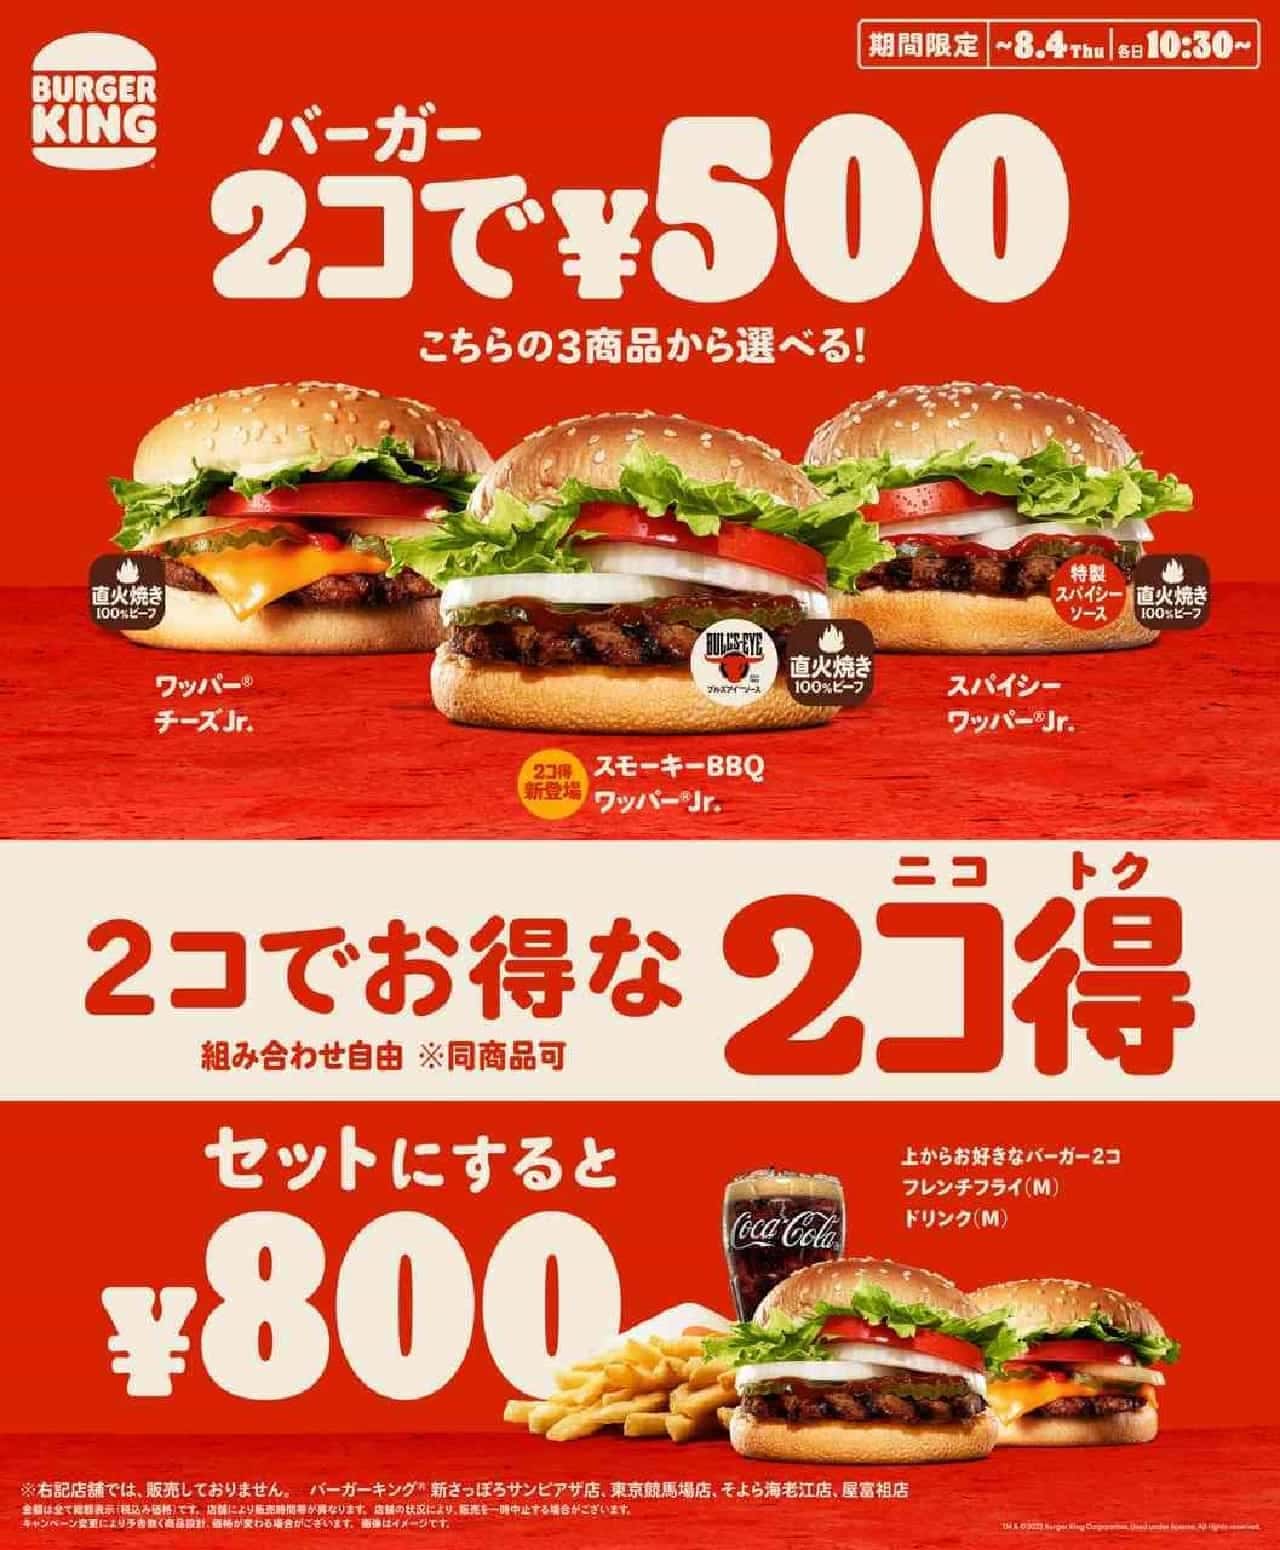 Burger King "2 koku (nikotoku)"